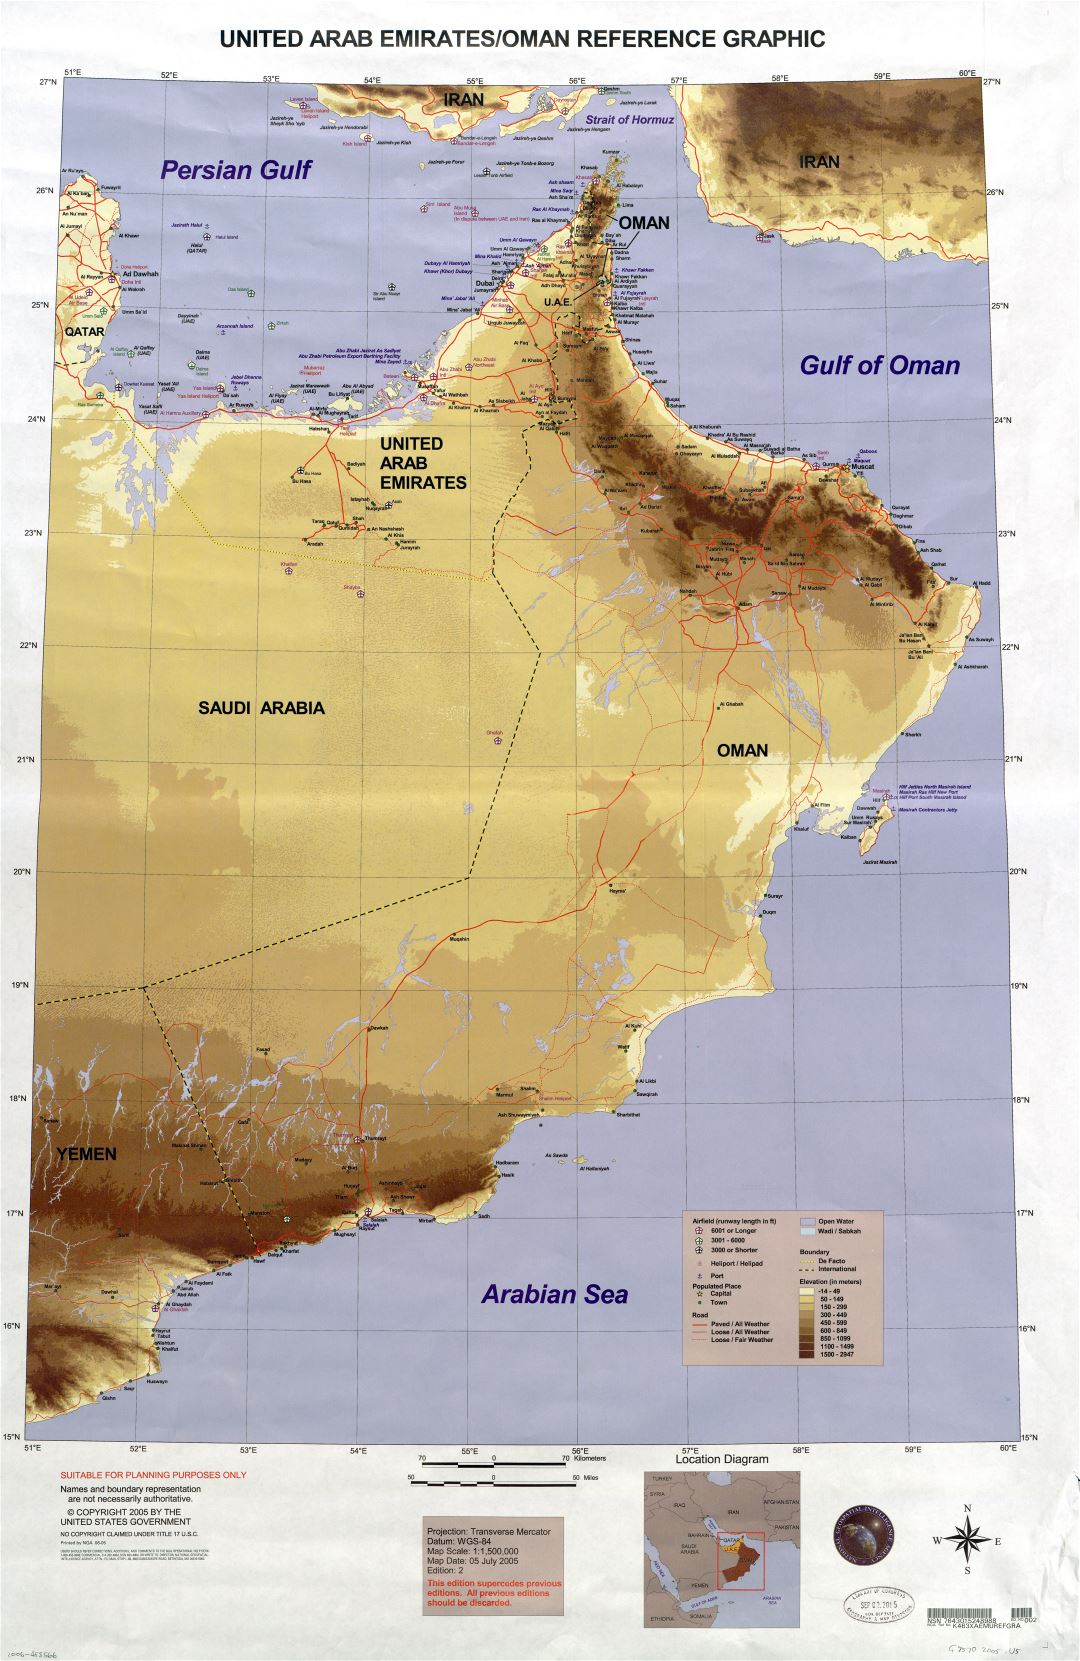 A gran escala detallado mapa gráfico de referencia de Emiratos Árabes Unidos y Omán - 2005